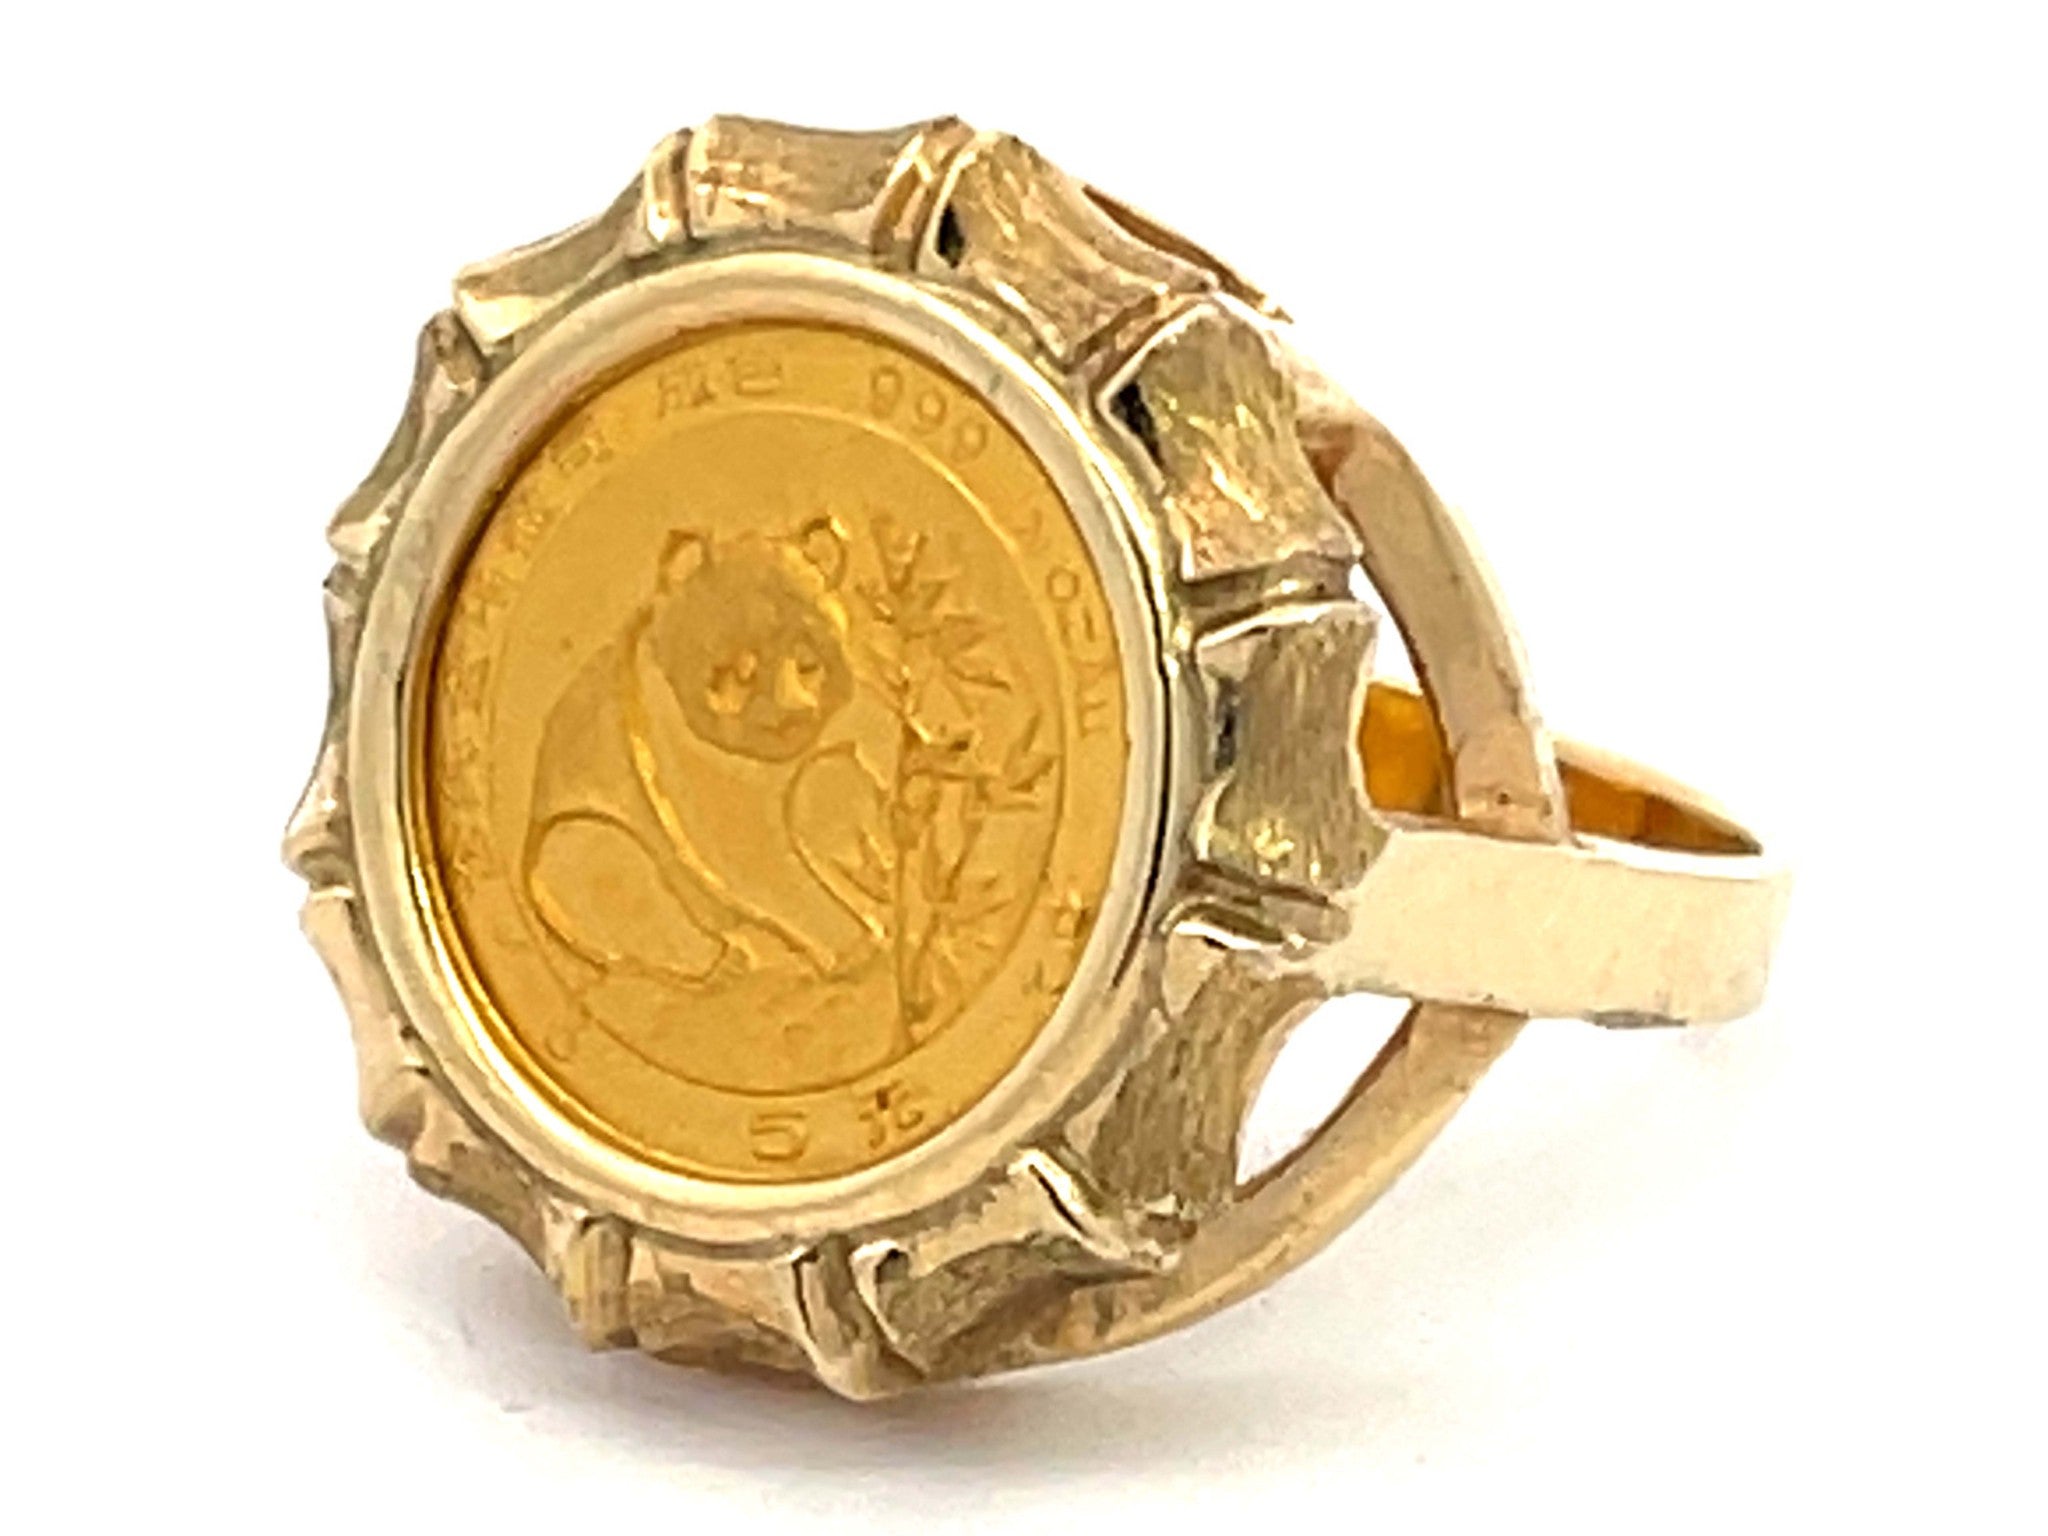 1988 Panda Coin Ring in 14k Yellow Gold